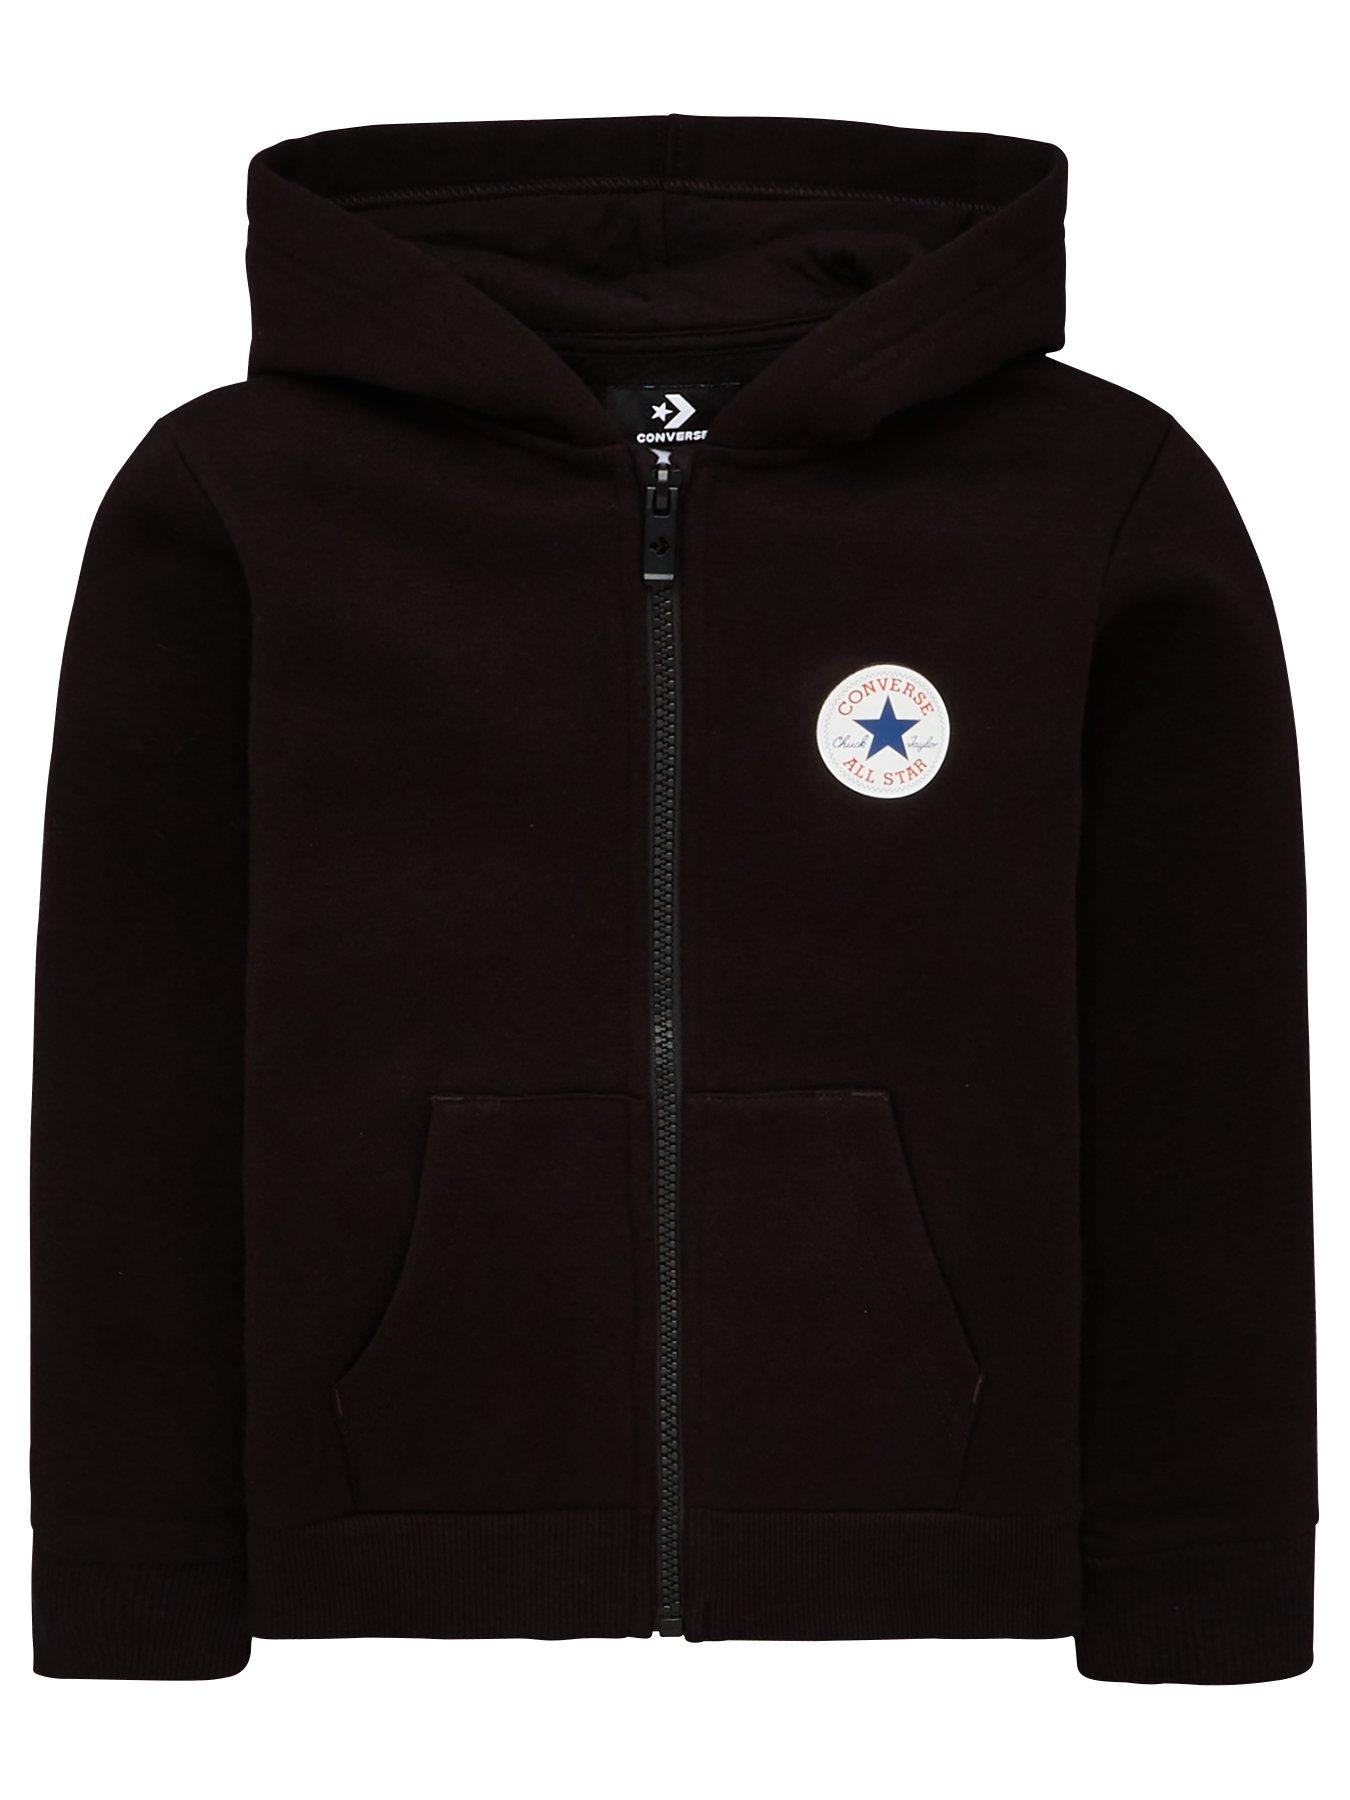 converse patch zip hoodie